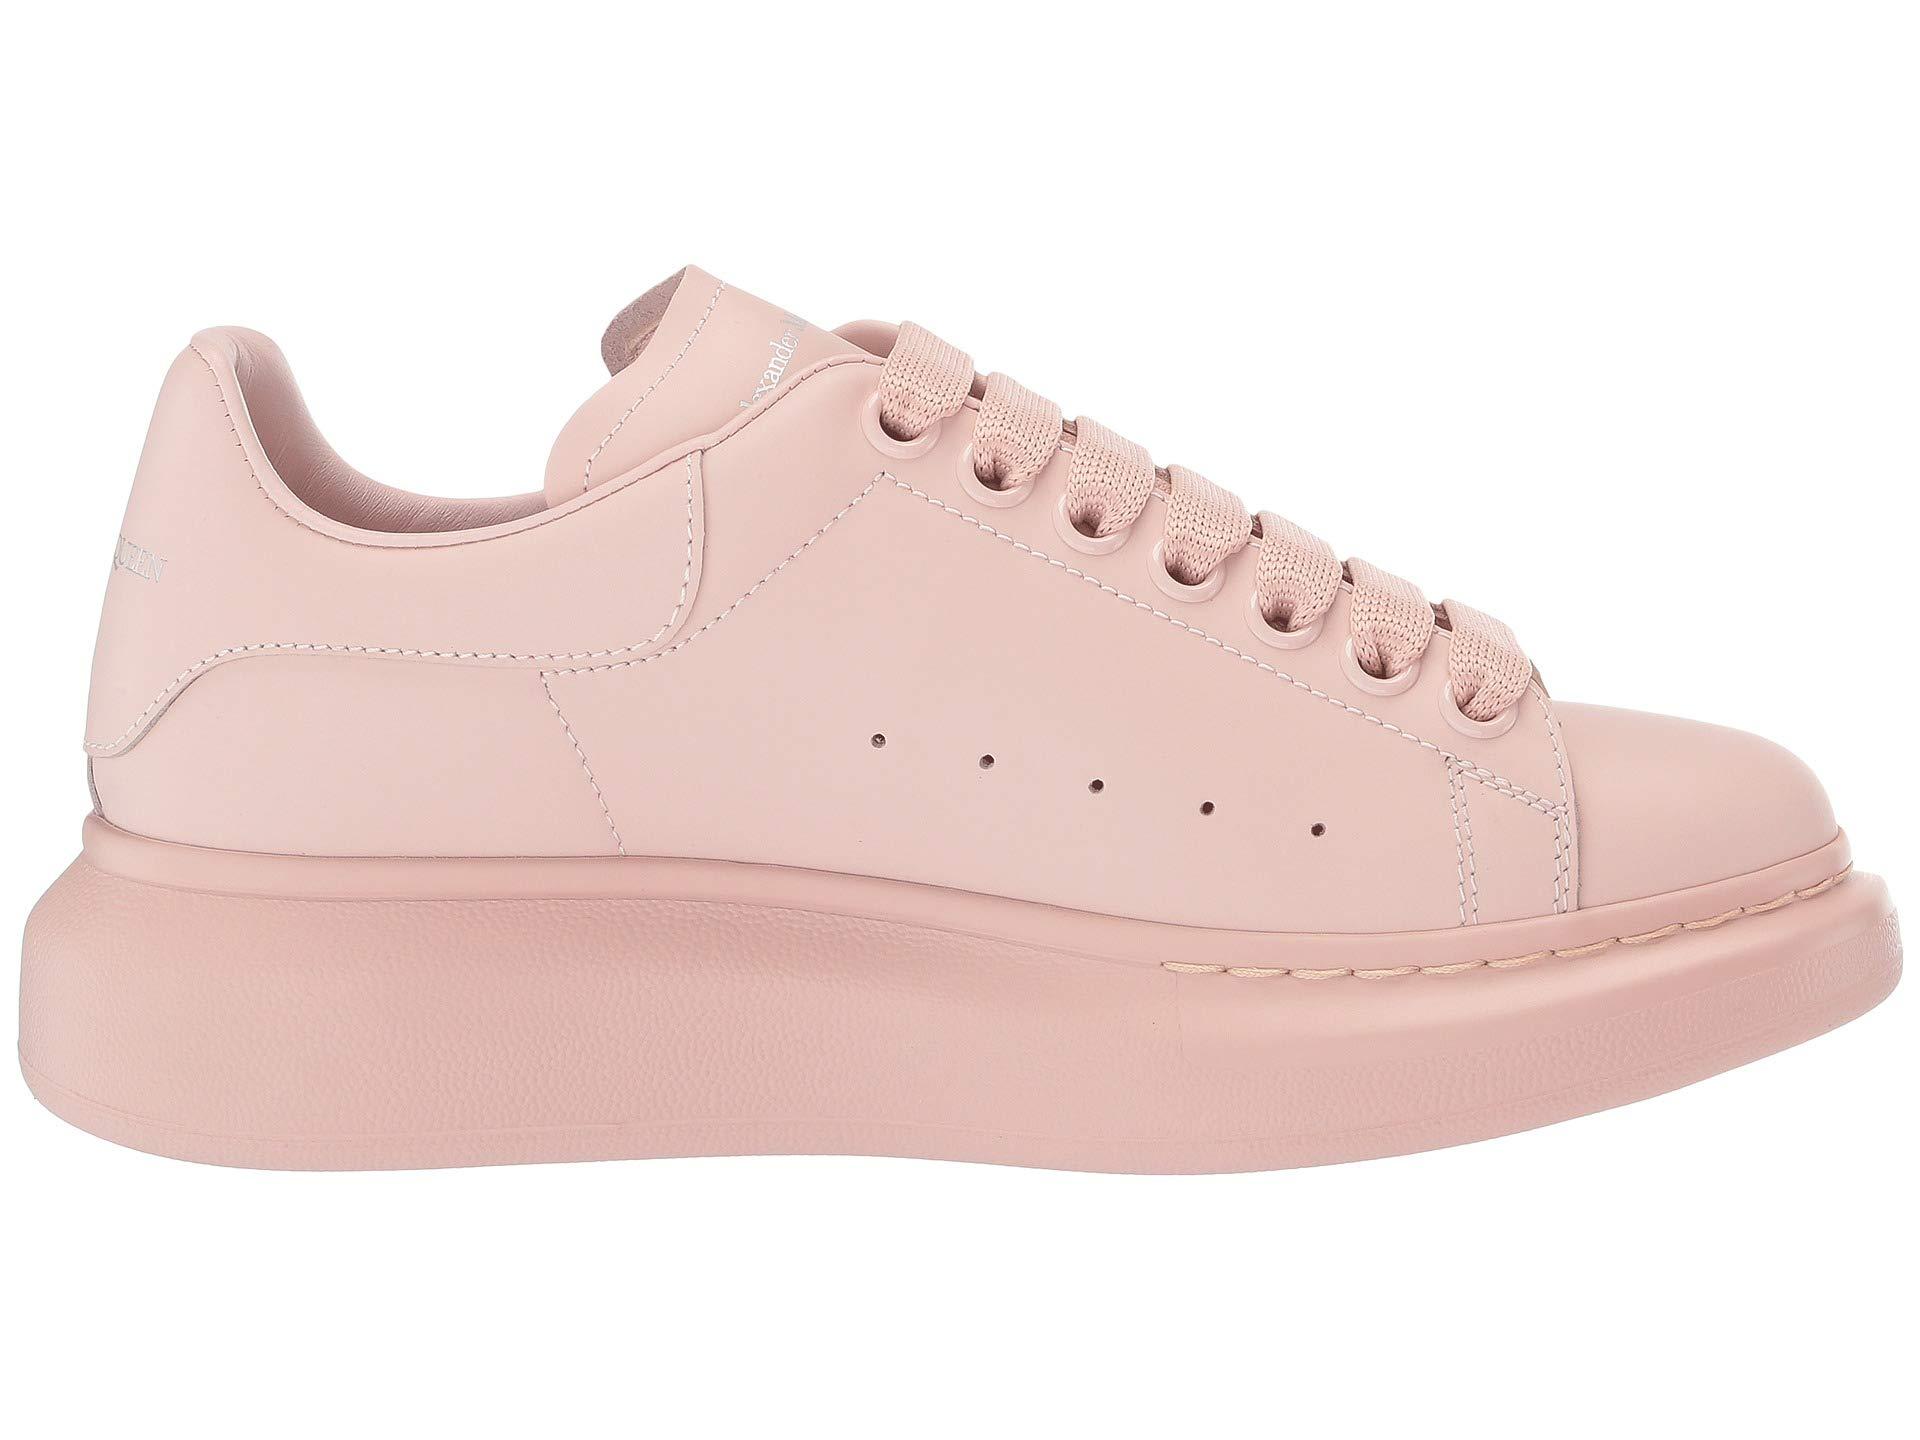 Alexander McQueen Leather Oversized Sneaker in Pink - Lyst